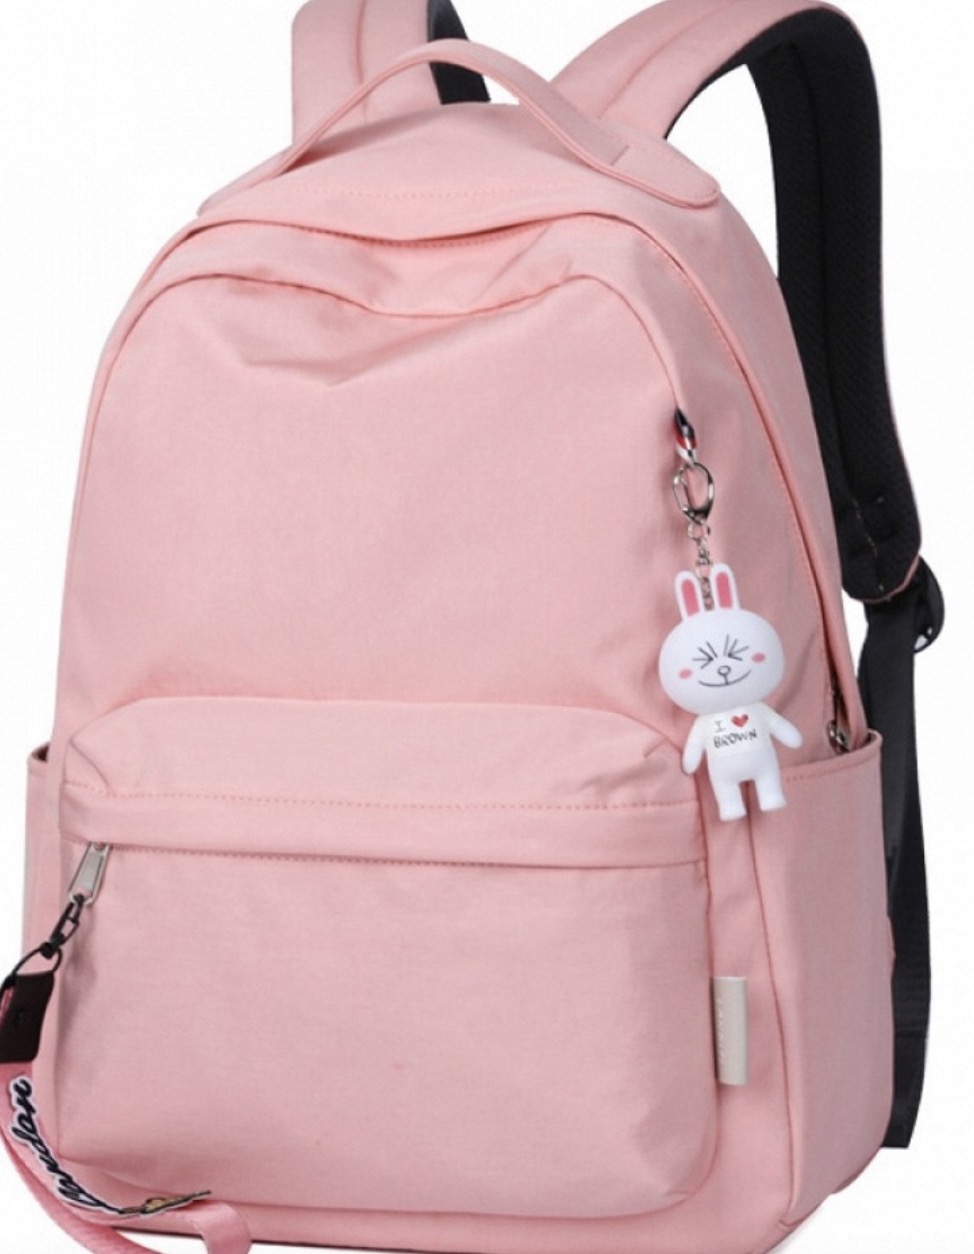 backpacks for teenage girl